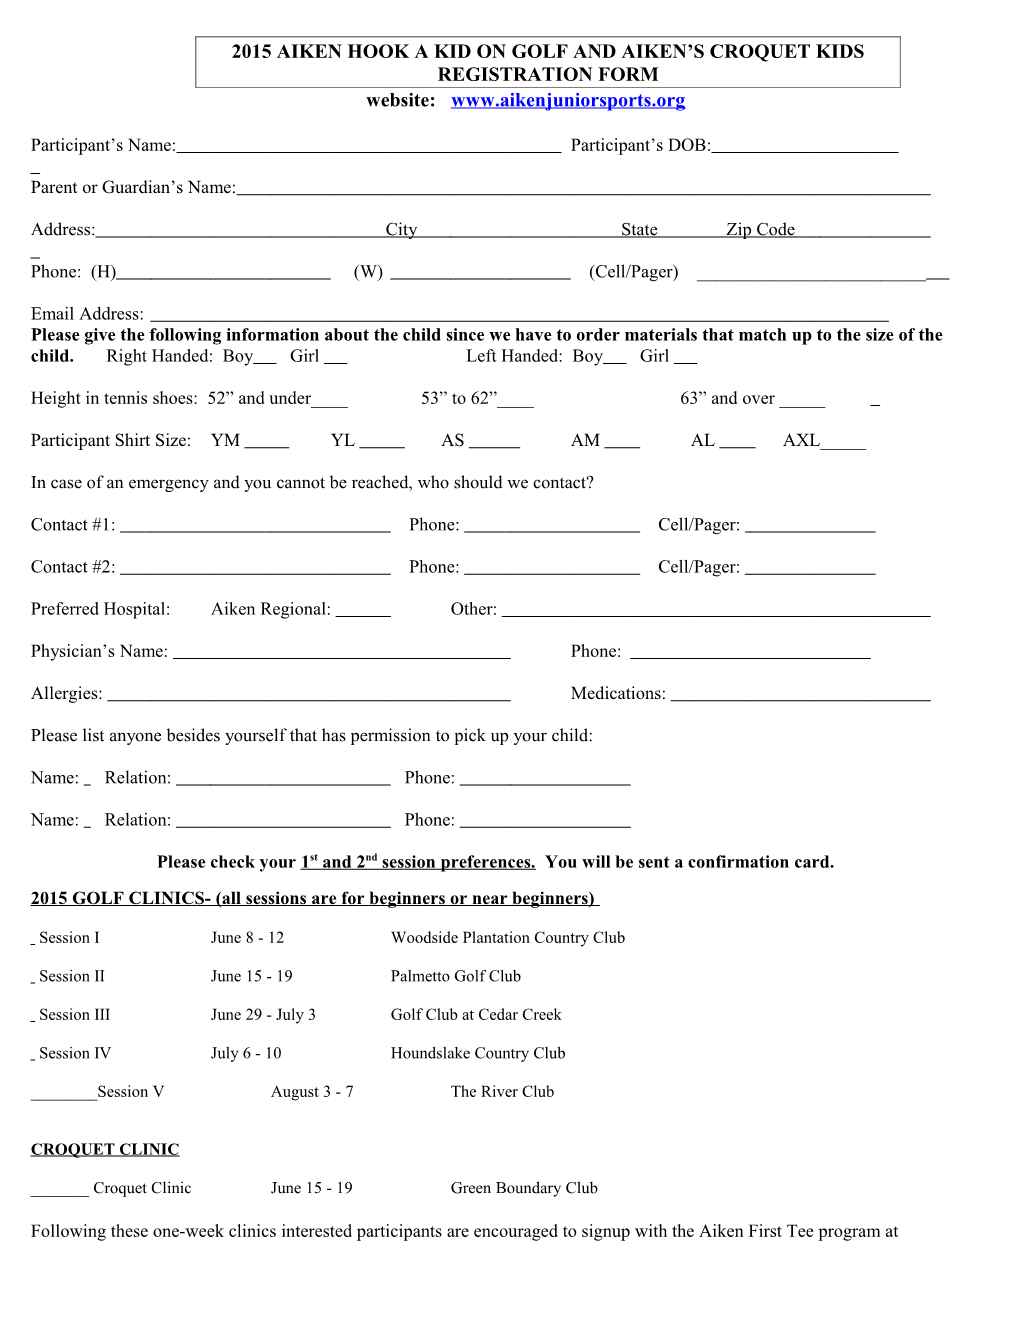 Aiken Hook a Kid on Golf Registration Form